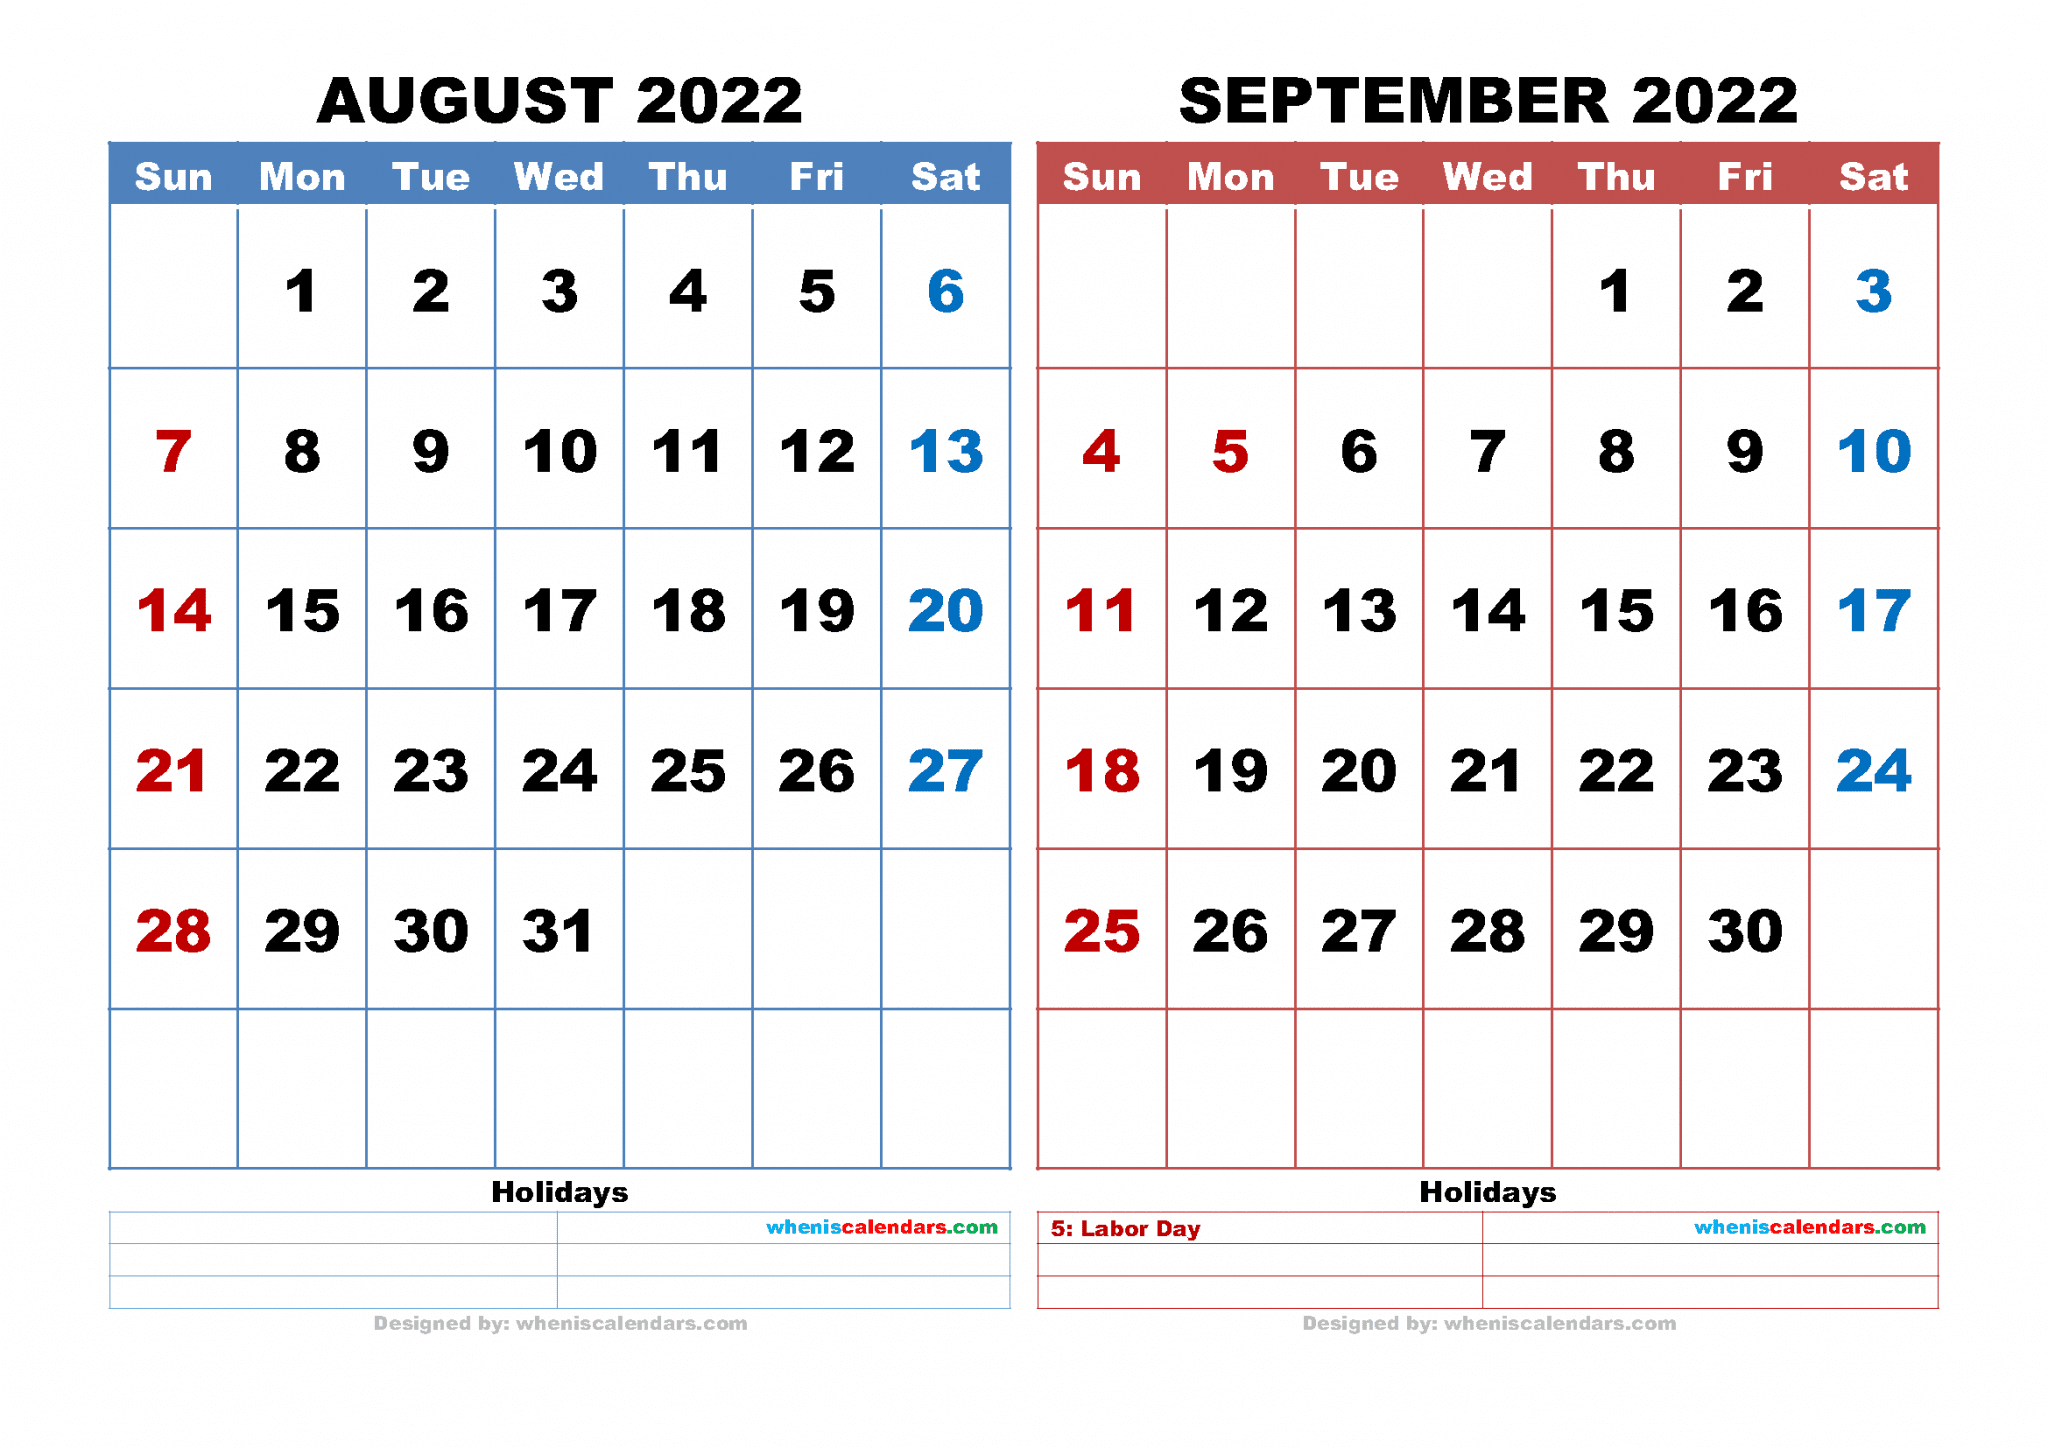 september-2022-calendar-printable-september-2022-calendar-printable-xnewsac